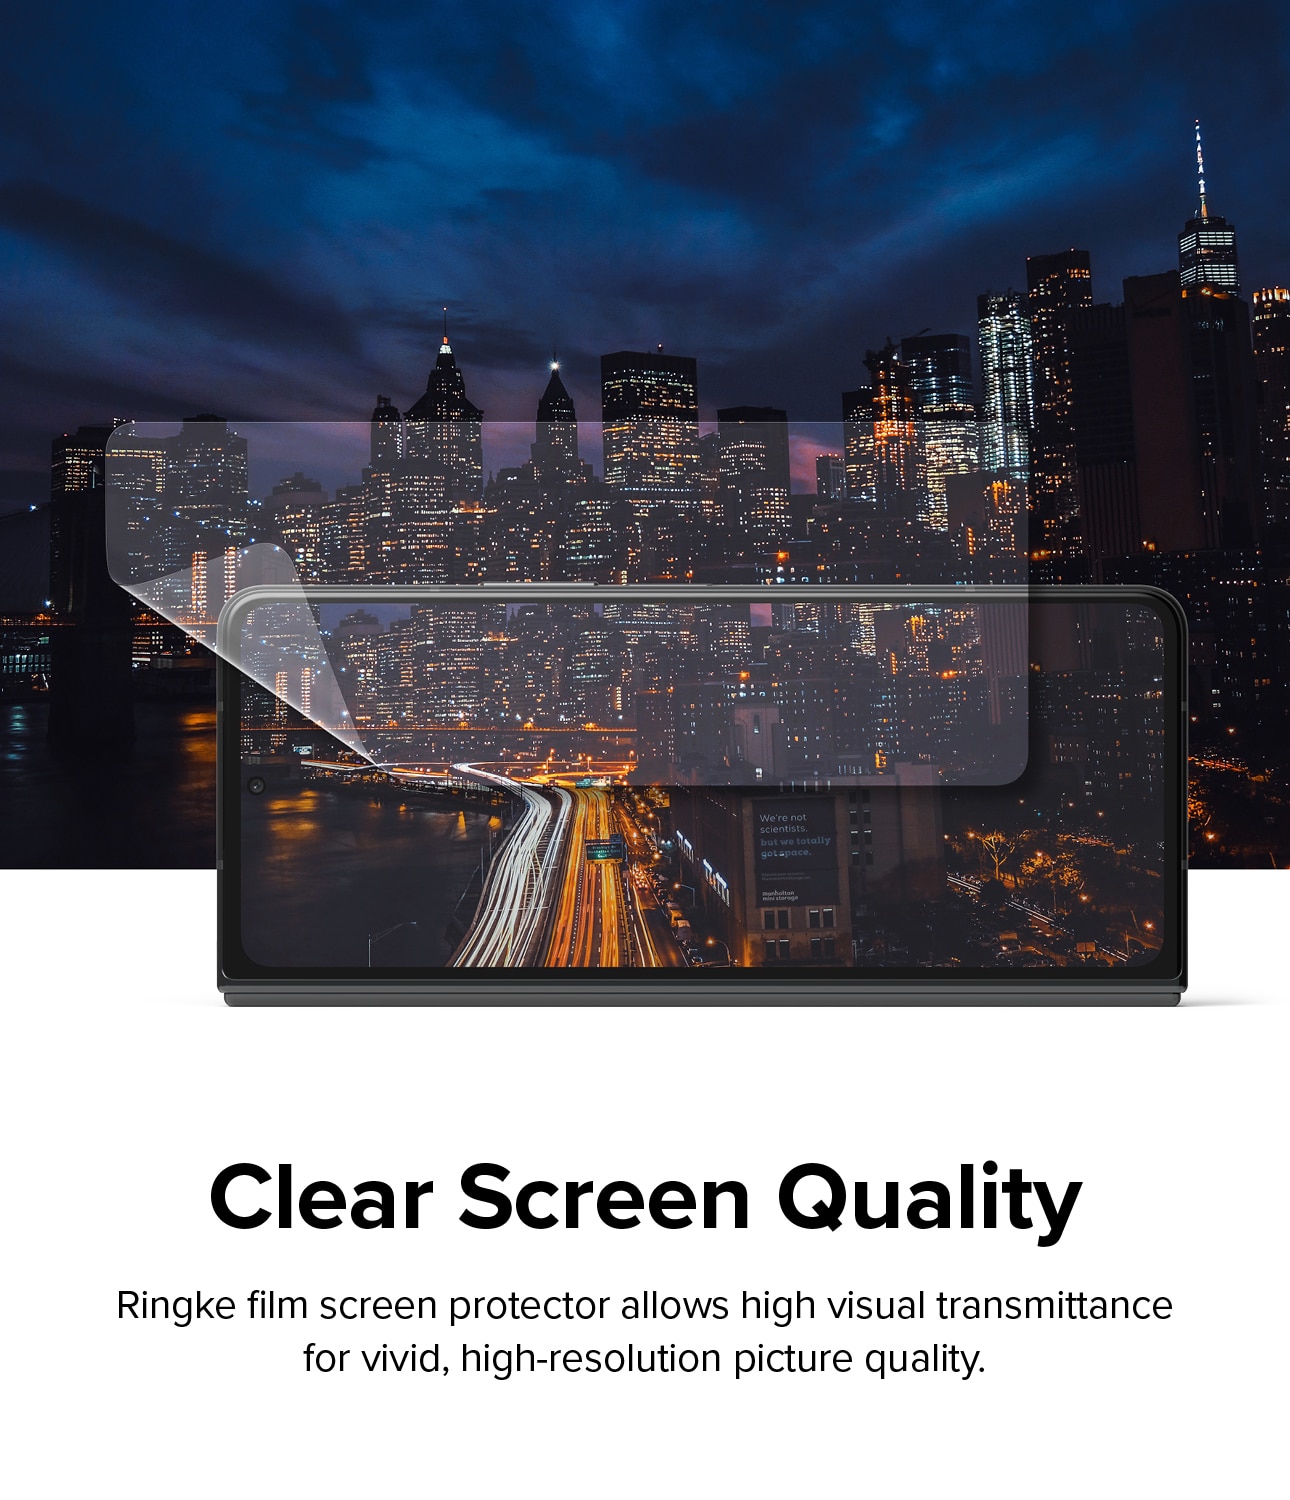 Samsung Galaxy Z Fold 4 Skärmskydd skyddsfilm - Dual Easy